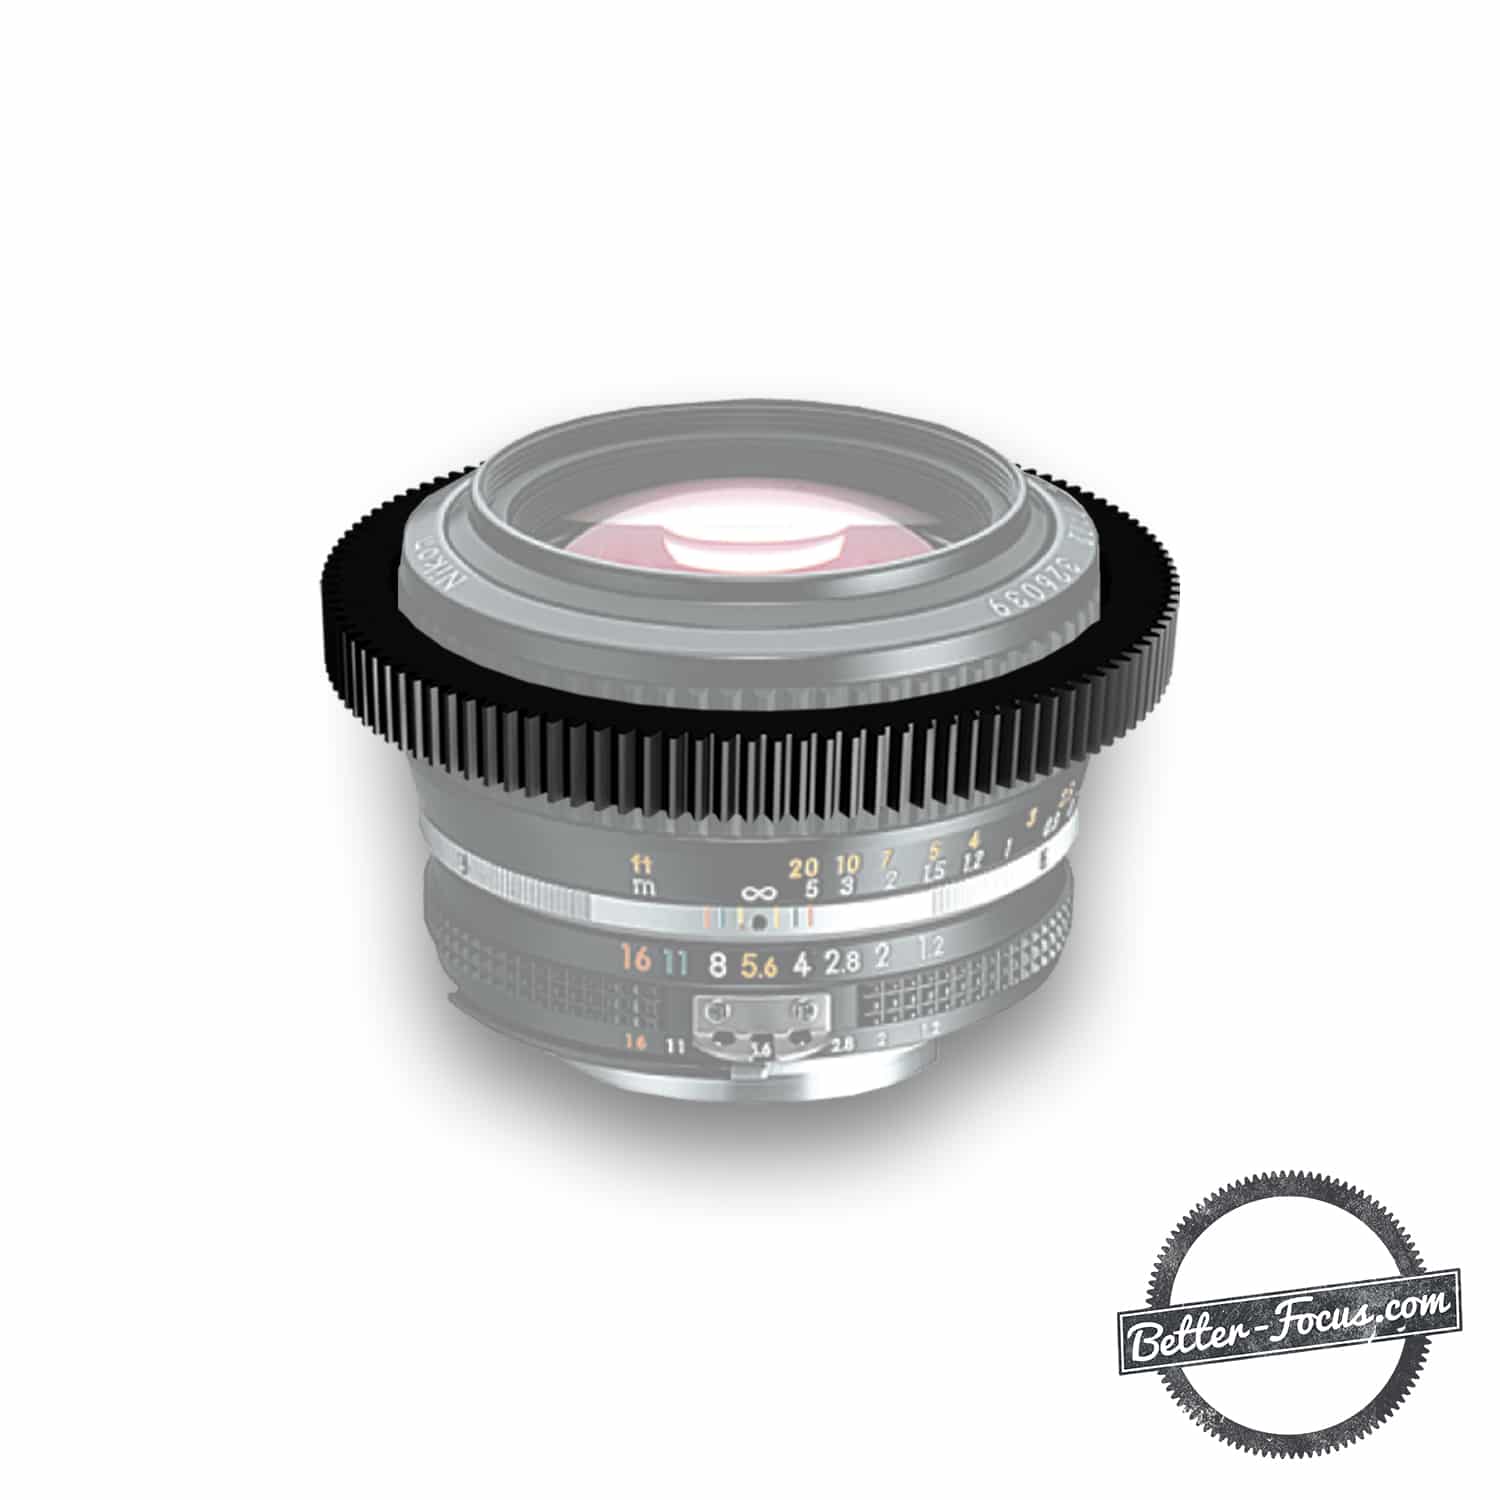 Follow Focus Gear for NIKON 50MM F1.2 AI  lens